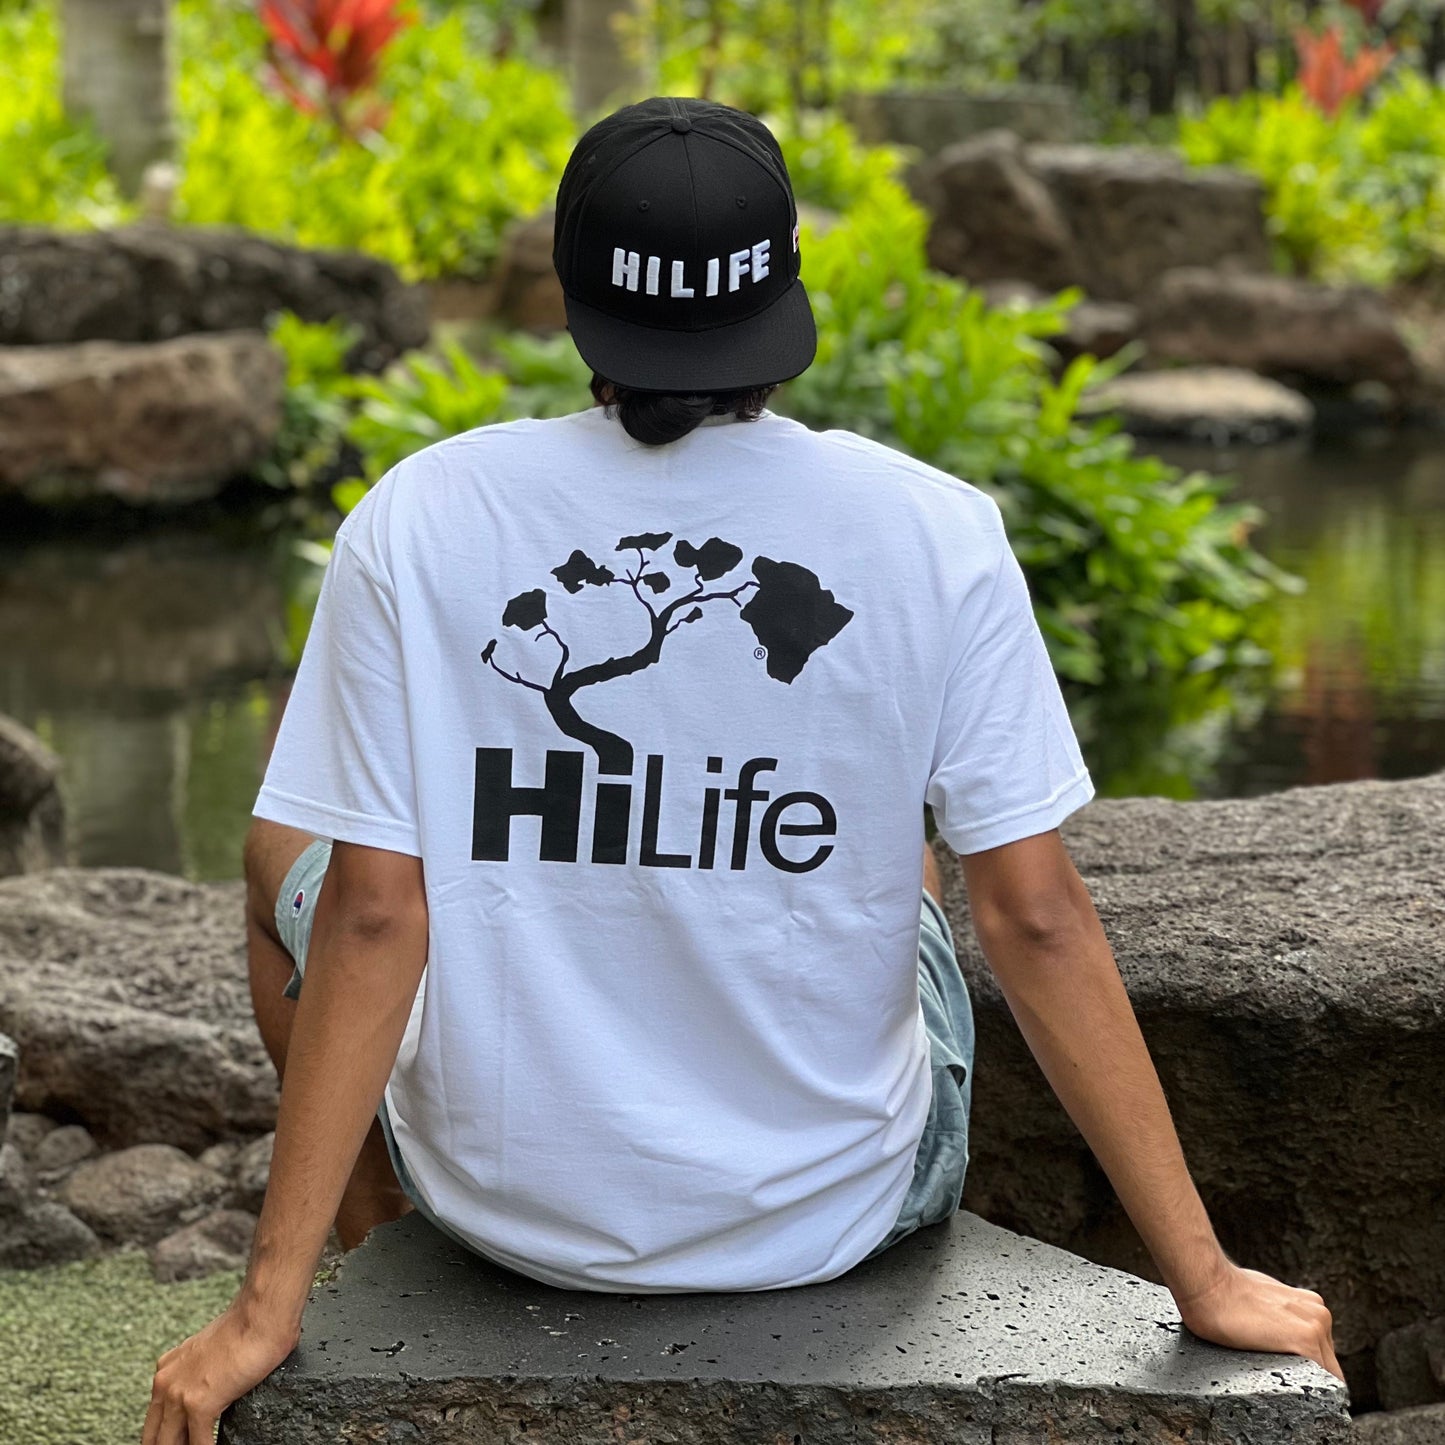 HILIFE logo Snapback hats Black